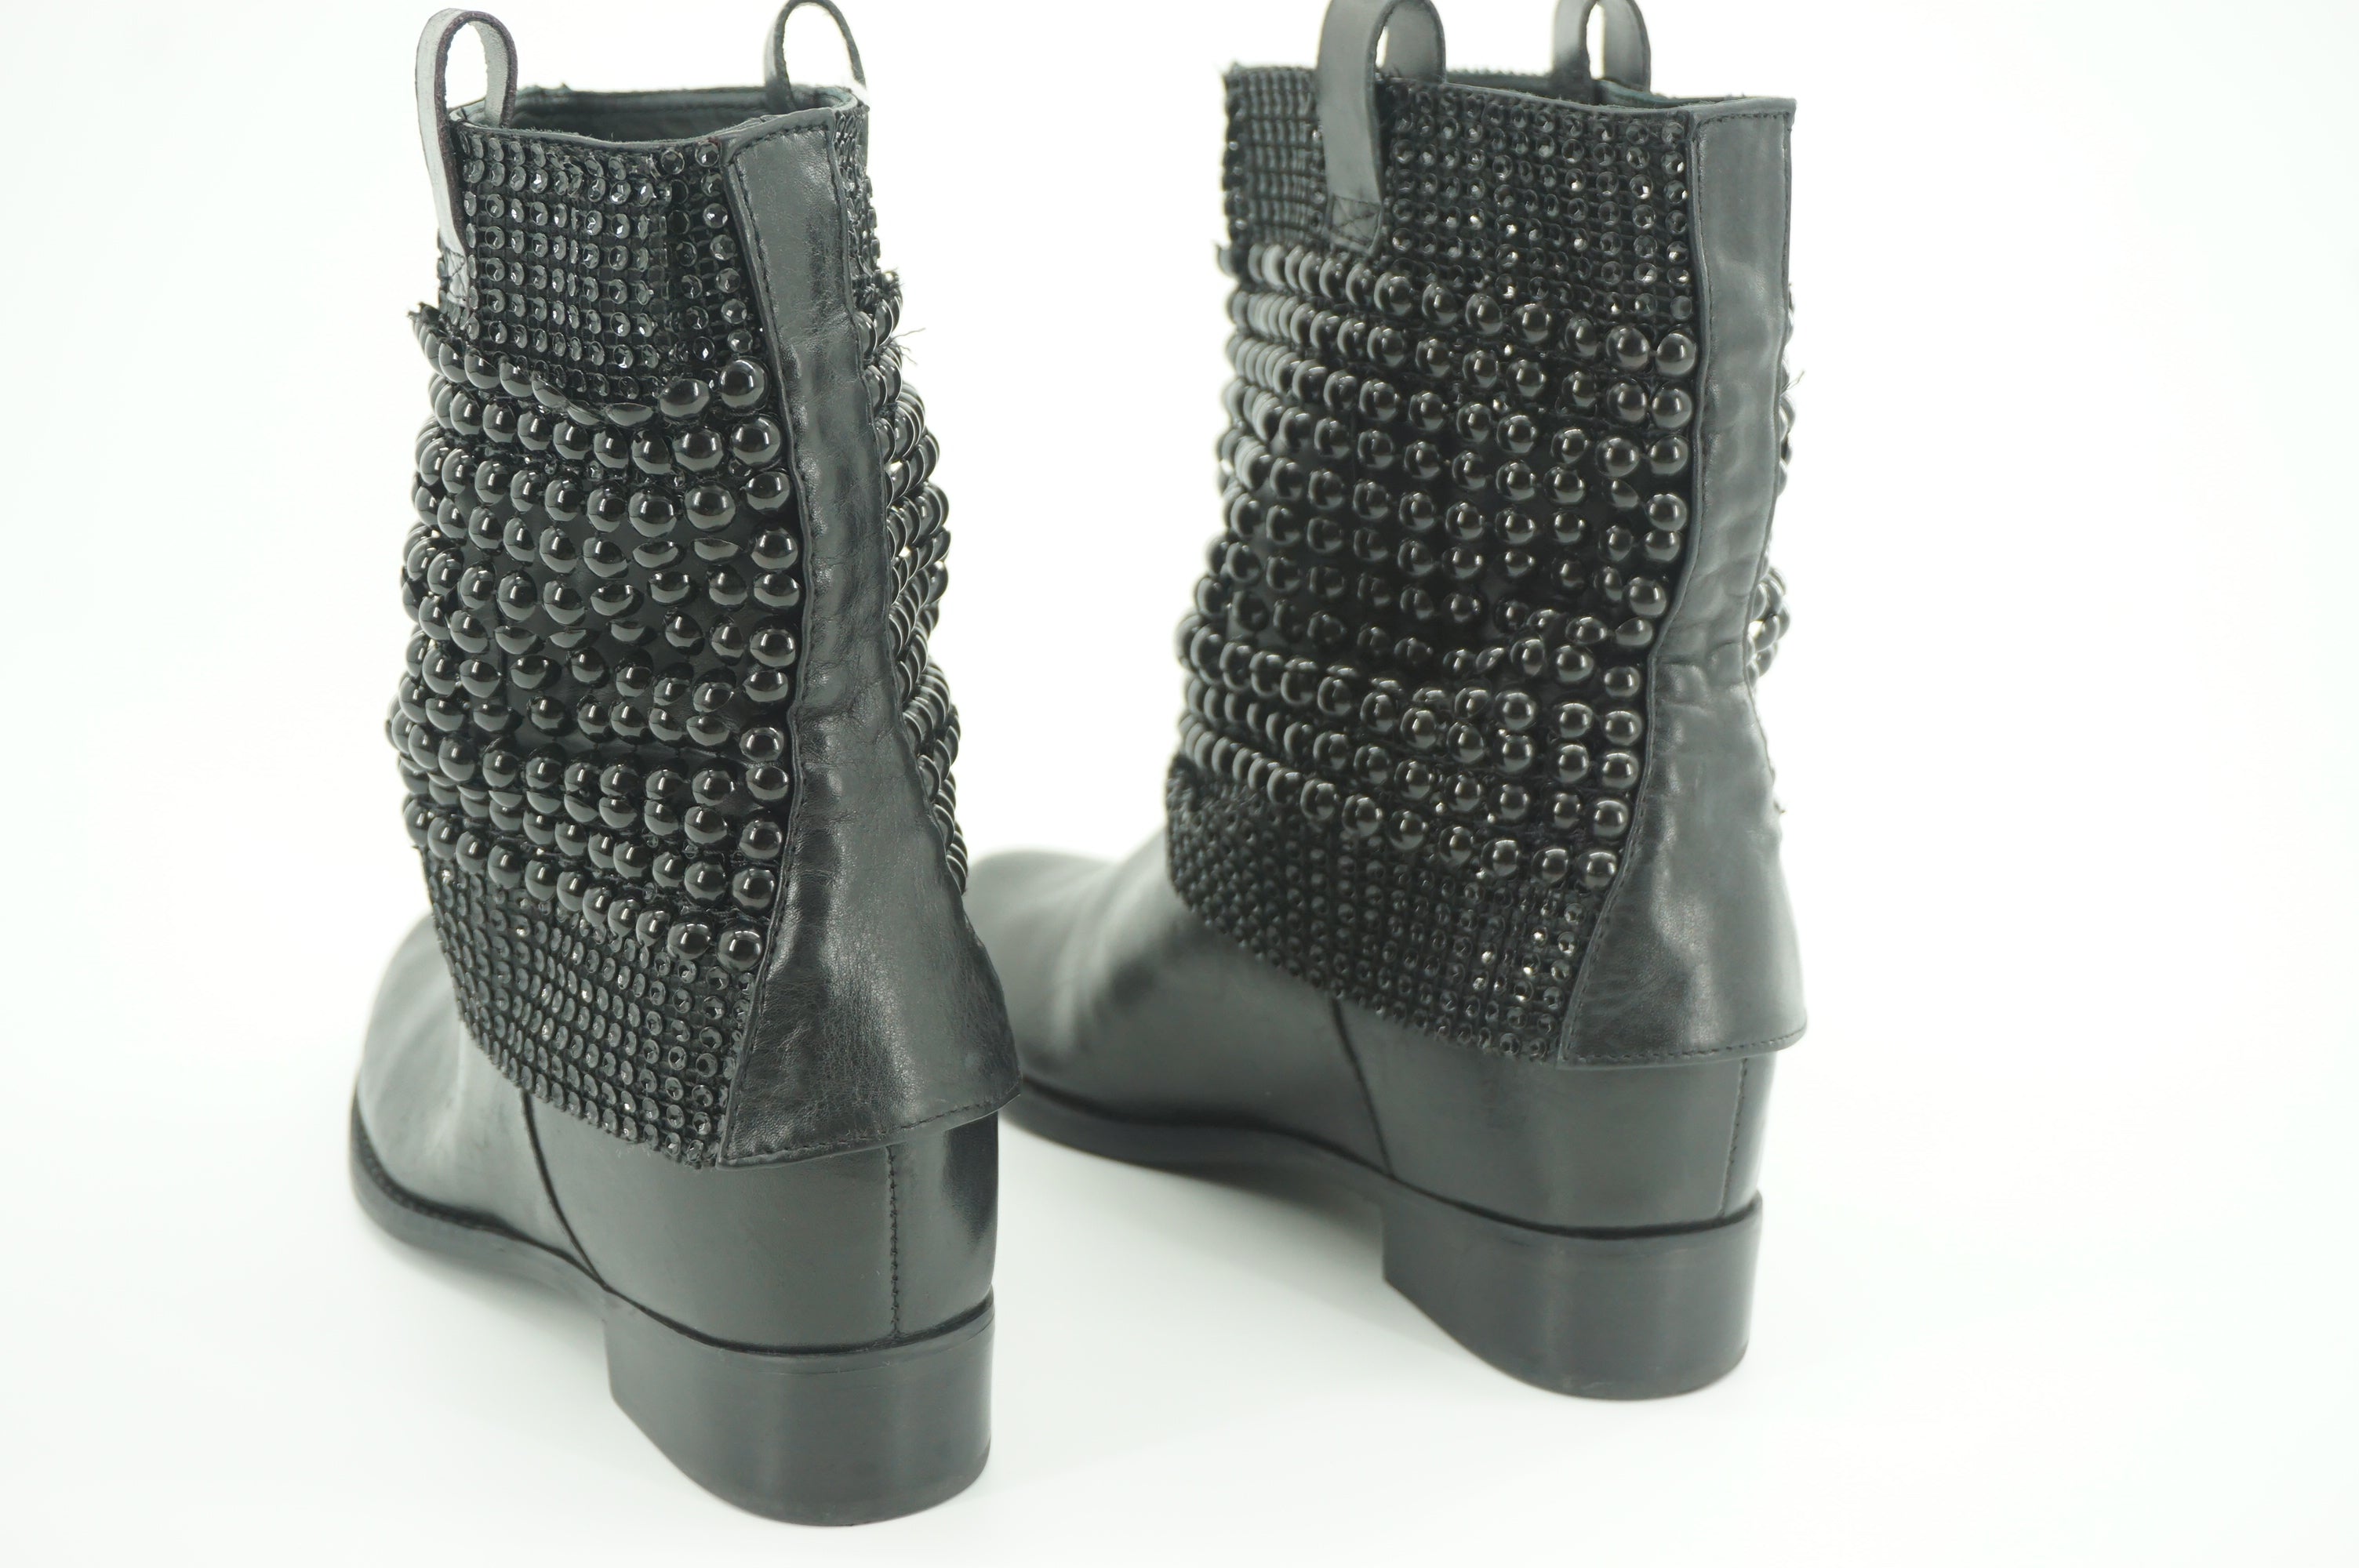 Schutz Bead-embellished Ankle Boots Boots SZ 6 Black Leather Hidden Heel $190